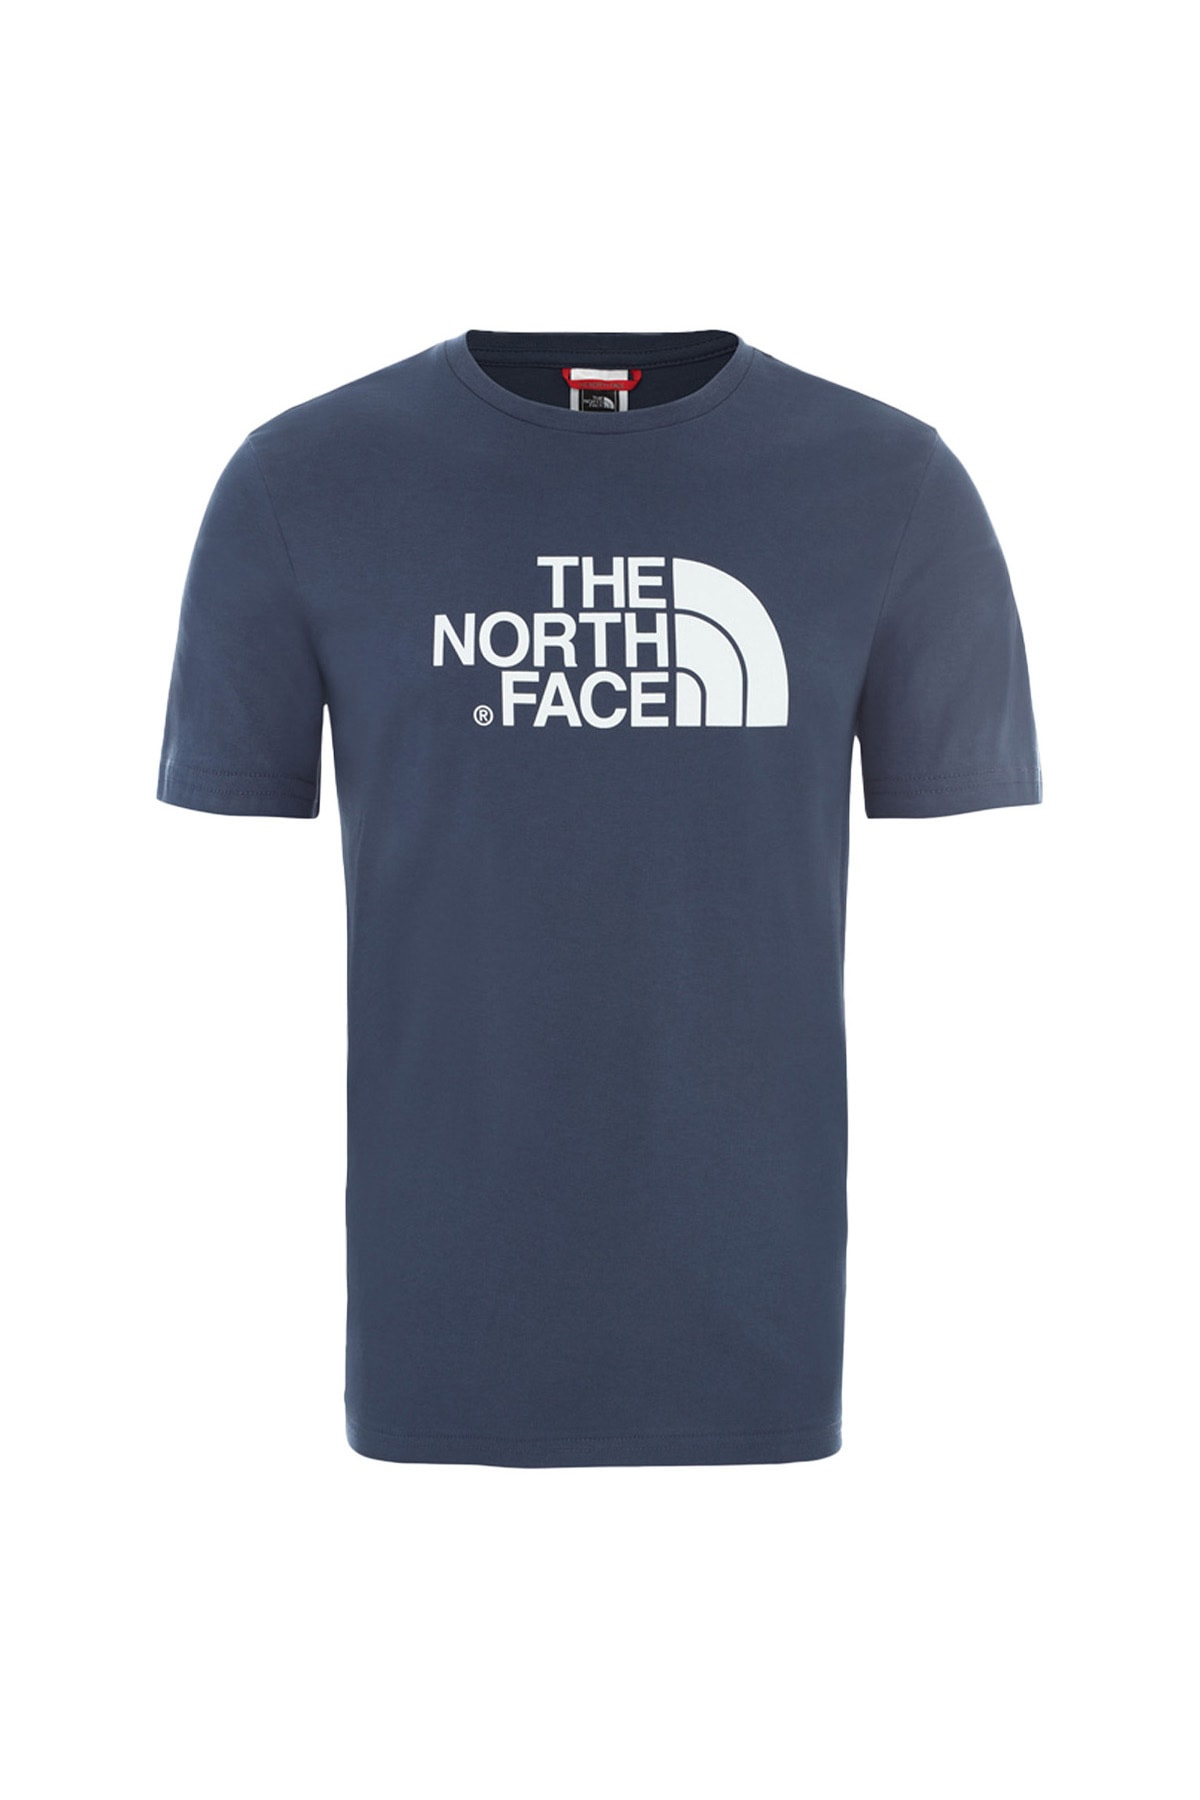 THE NORTH FACE Easy Tee Erkek T-shirt - Nf0a2tx3